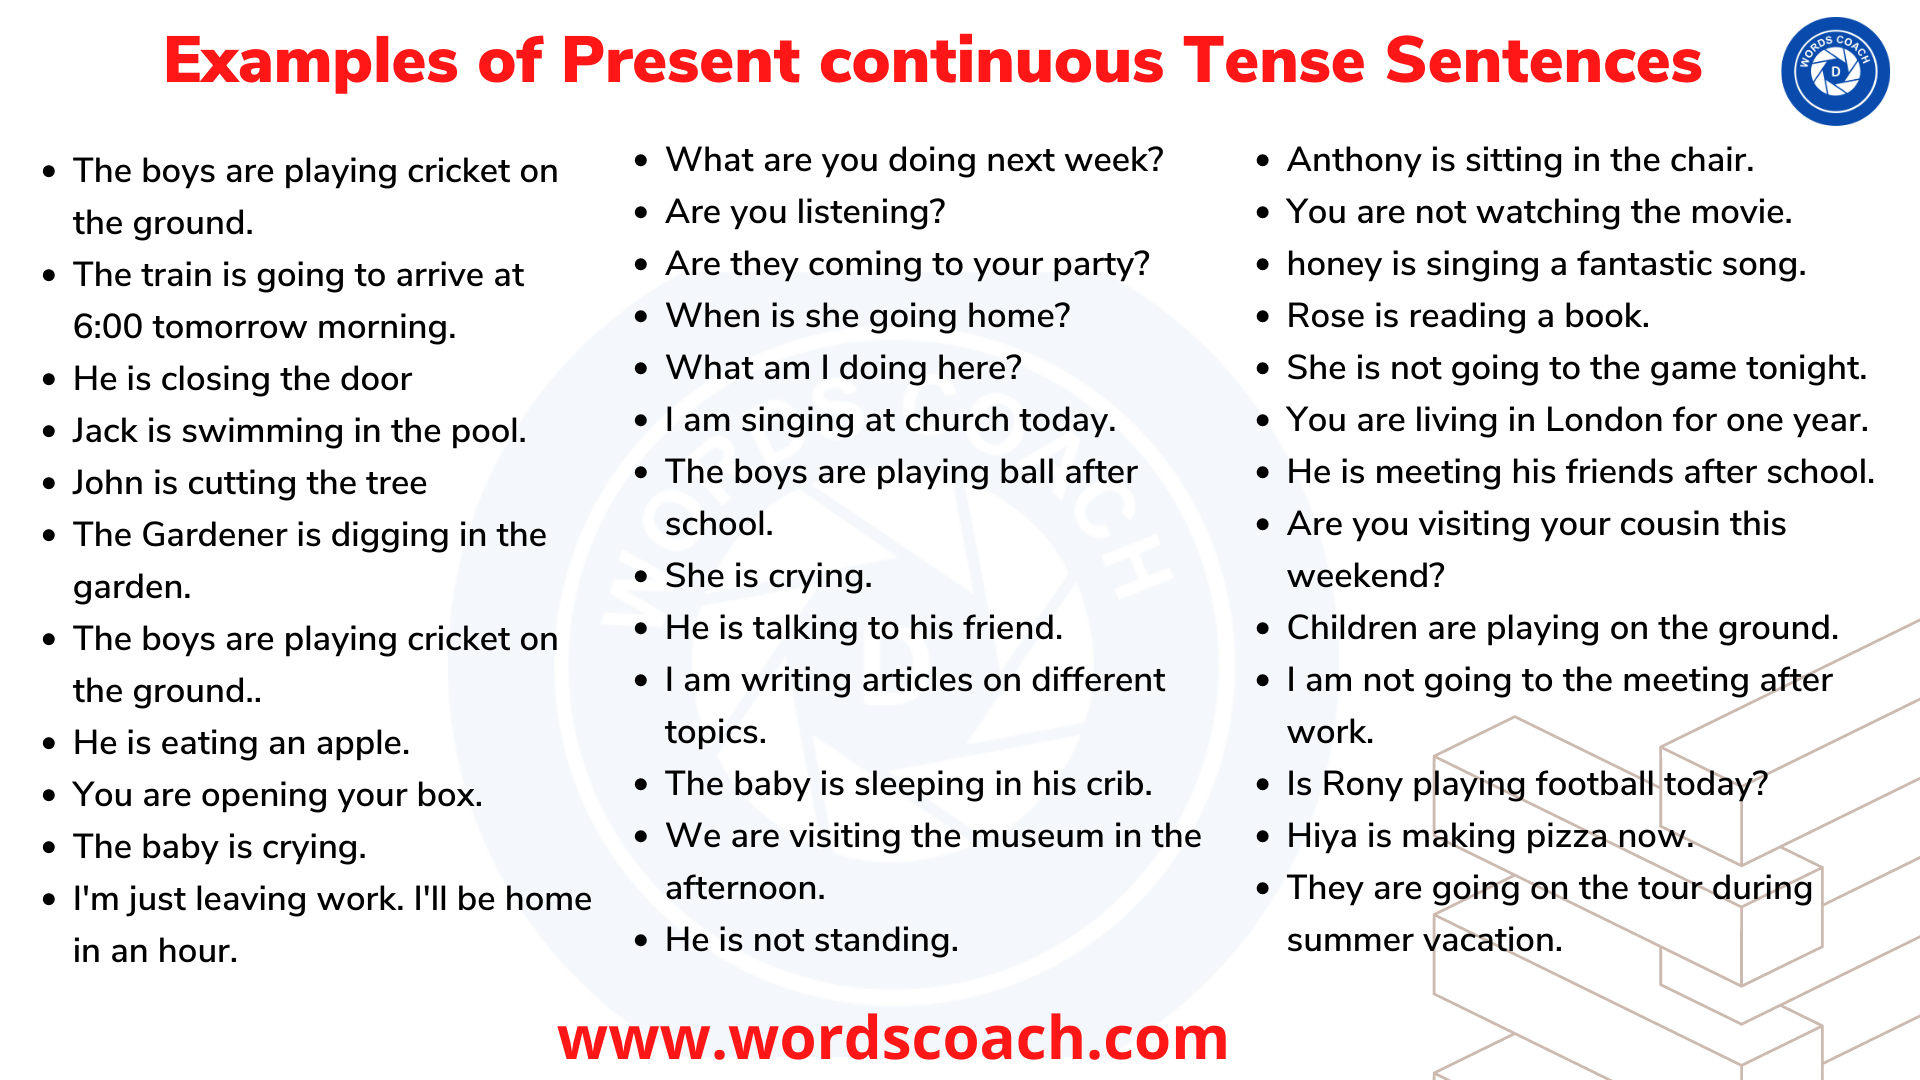 Examples of Present continuous Tense Sentences - wordscoach.com